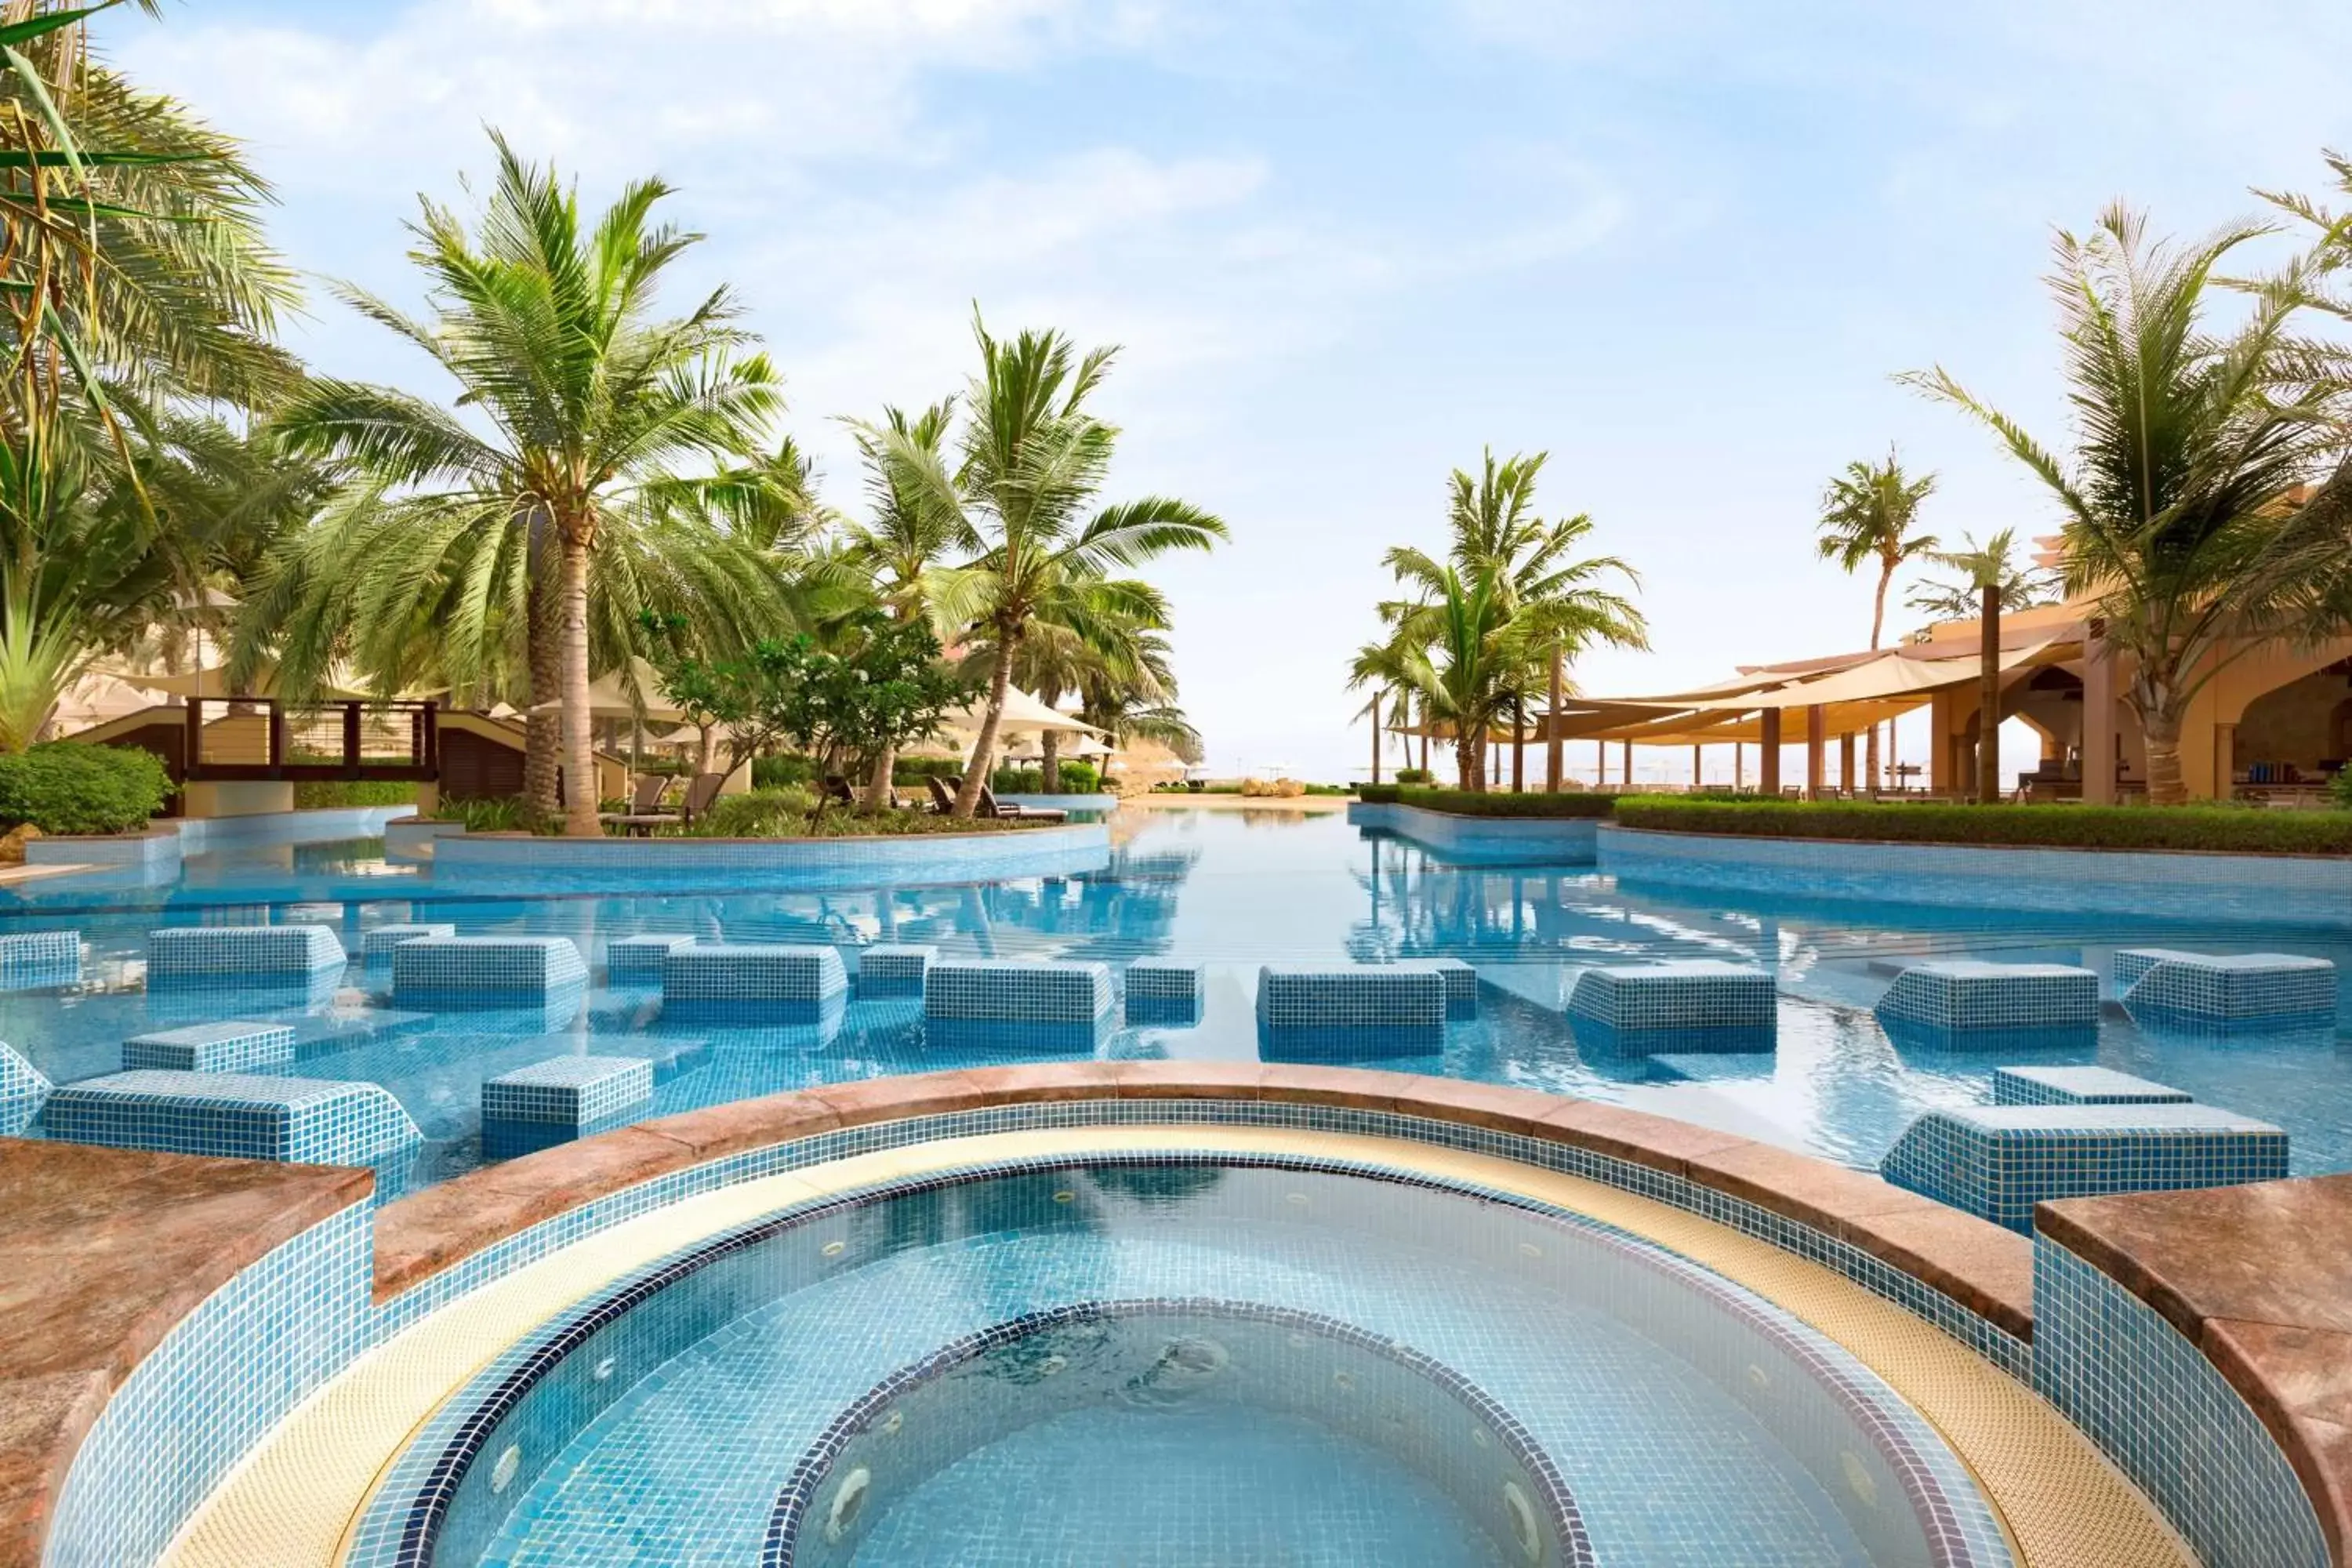 On site, Swimming Pool in Shangri-La Barr Al Jissah, Muscat